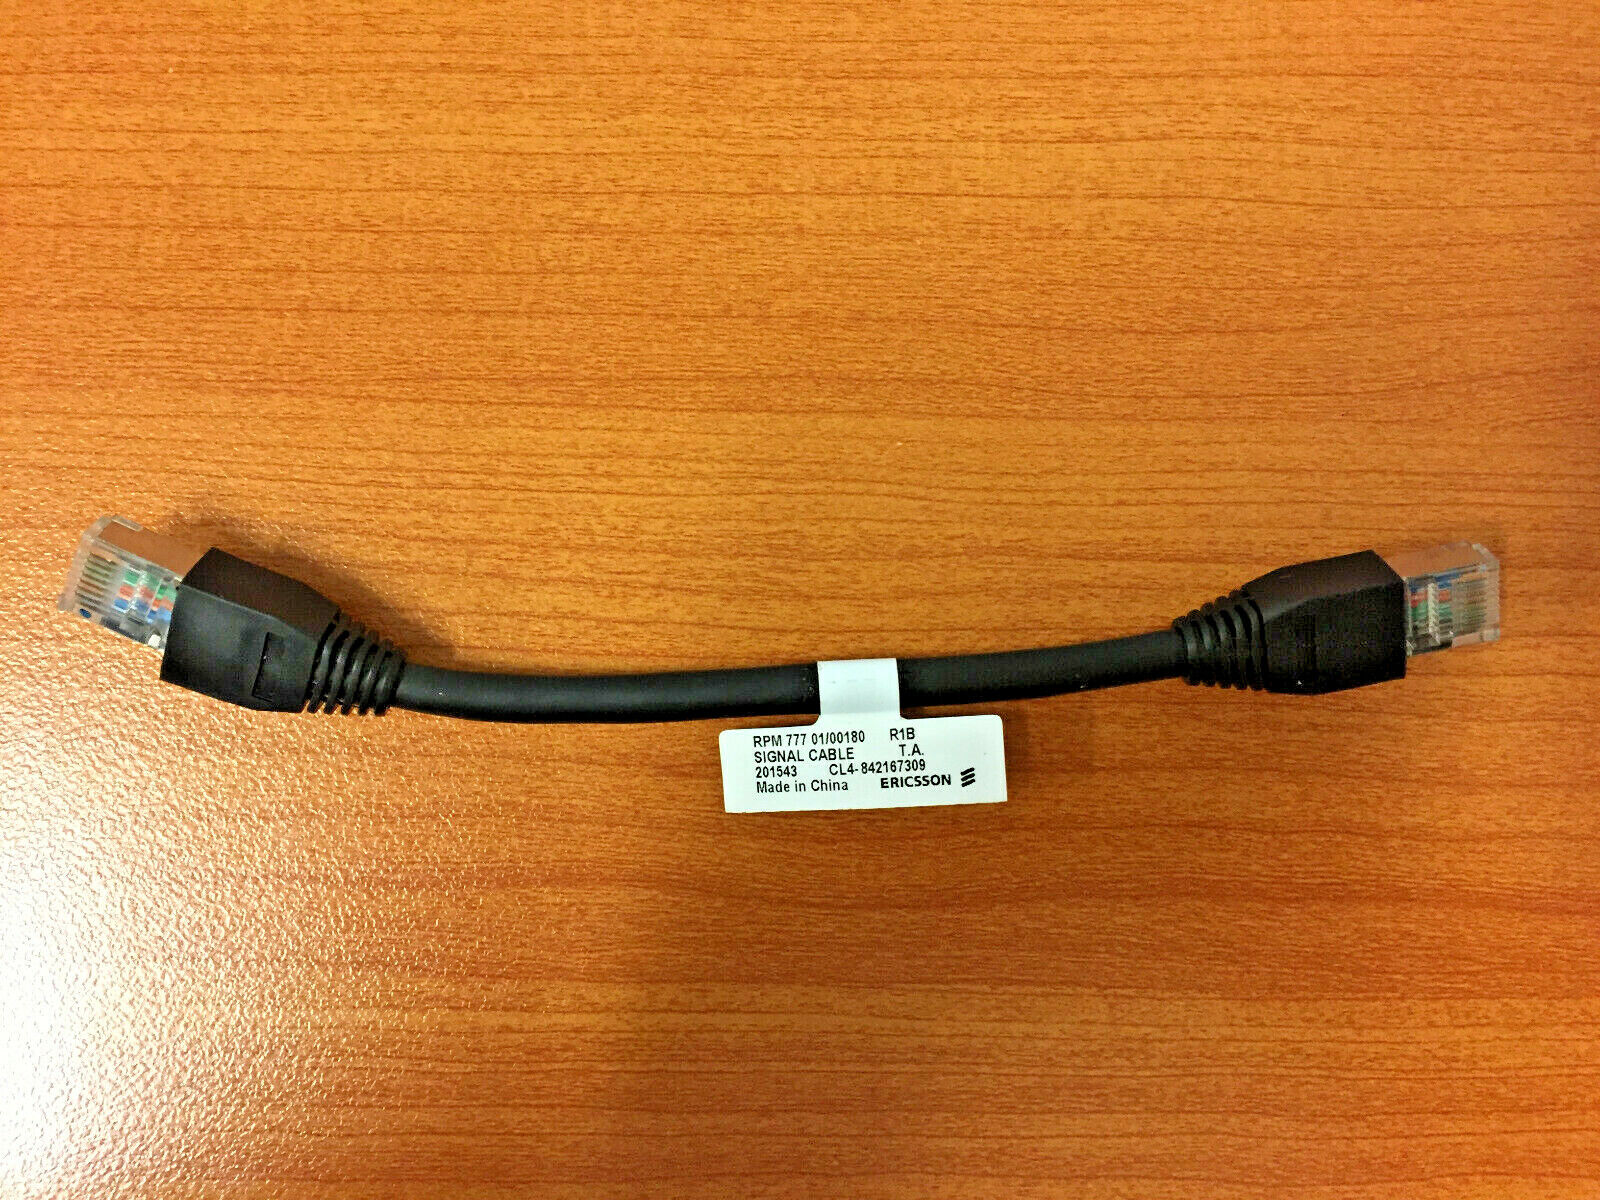 Ericsson RPM 777 01/00180 R1B Signal Cable